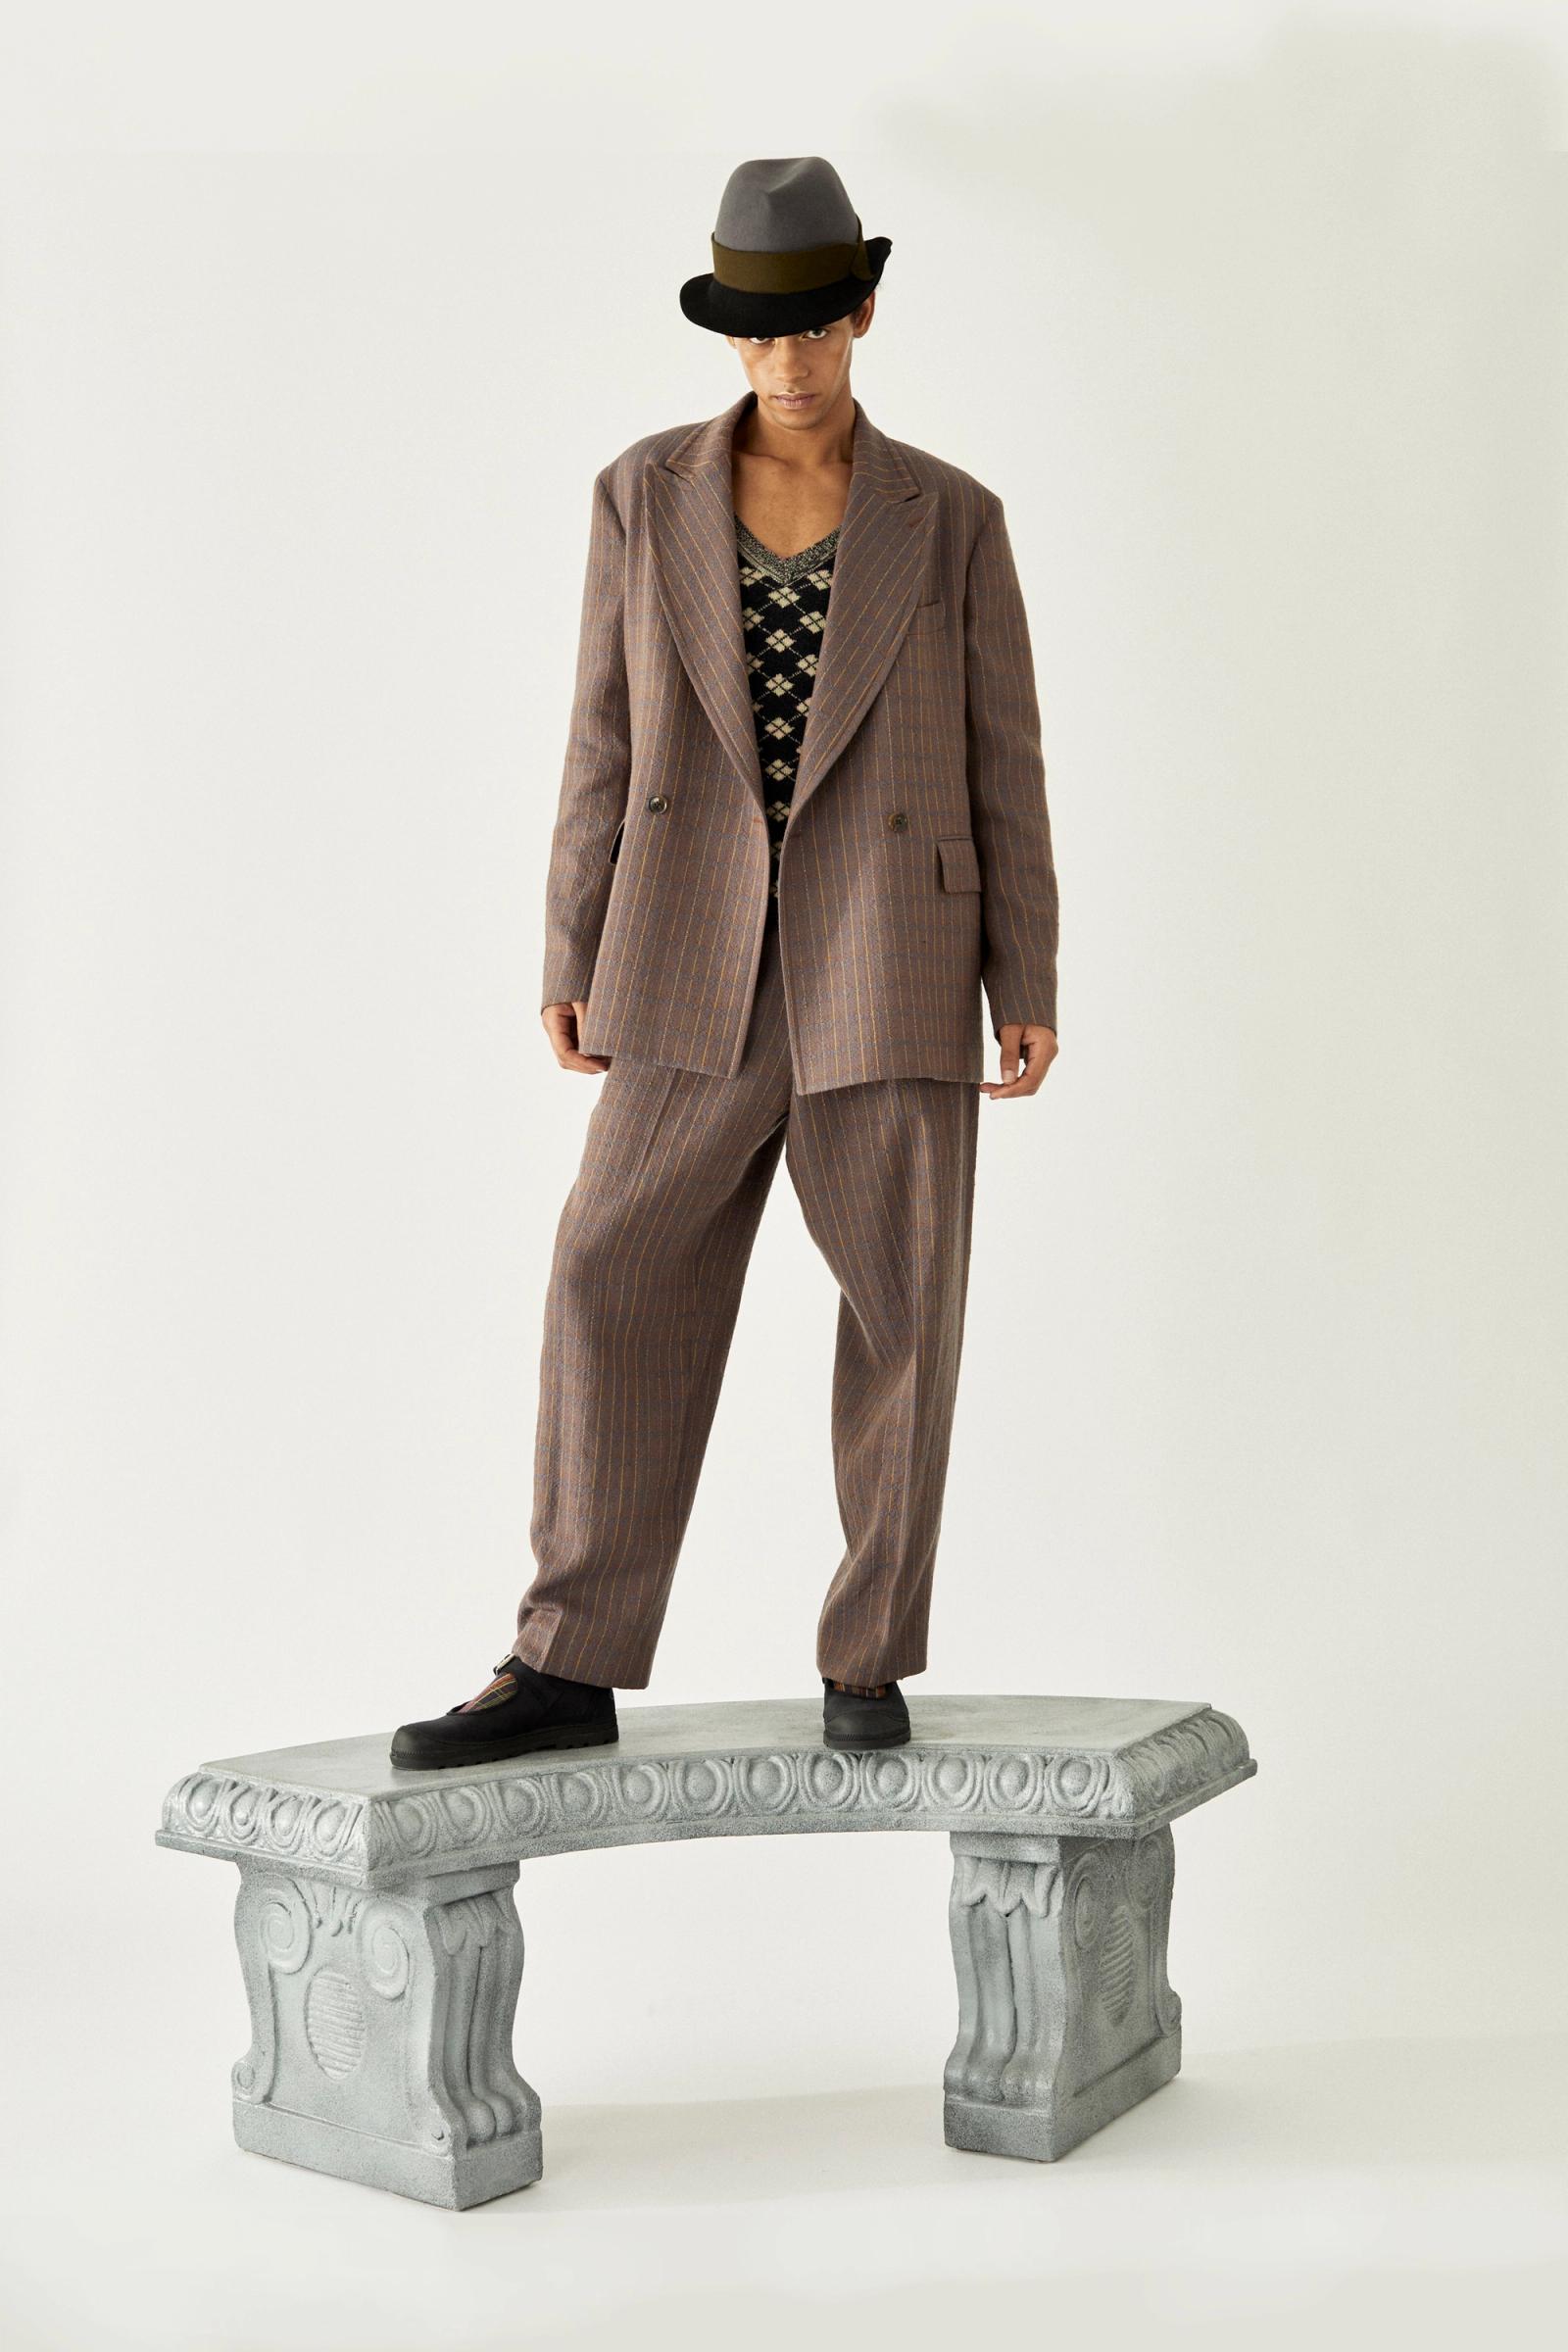 Andeas Kronthaler - for Vivienne Westwood F/W21 styled by Sabina Schreder